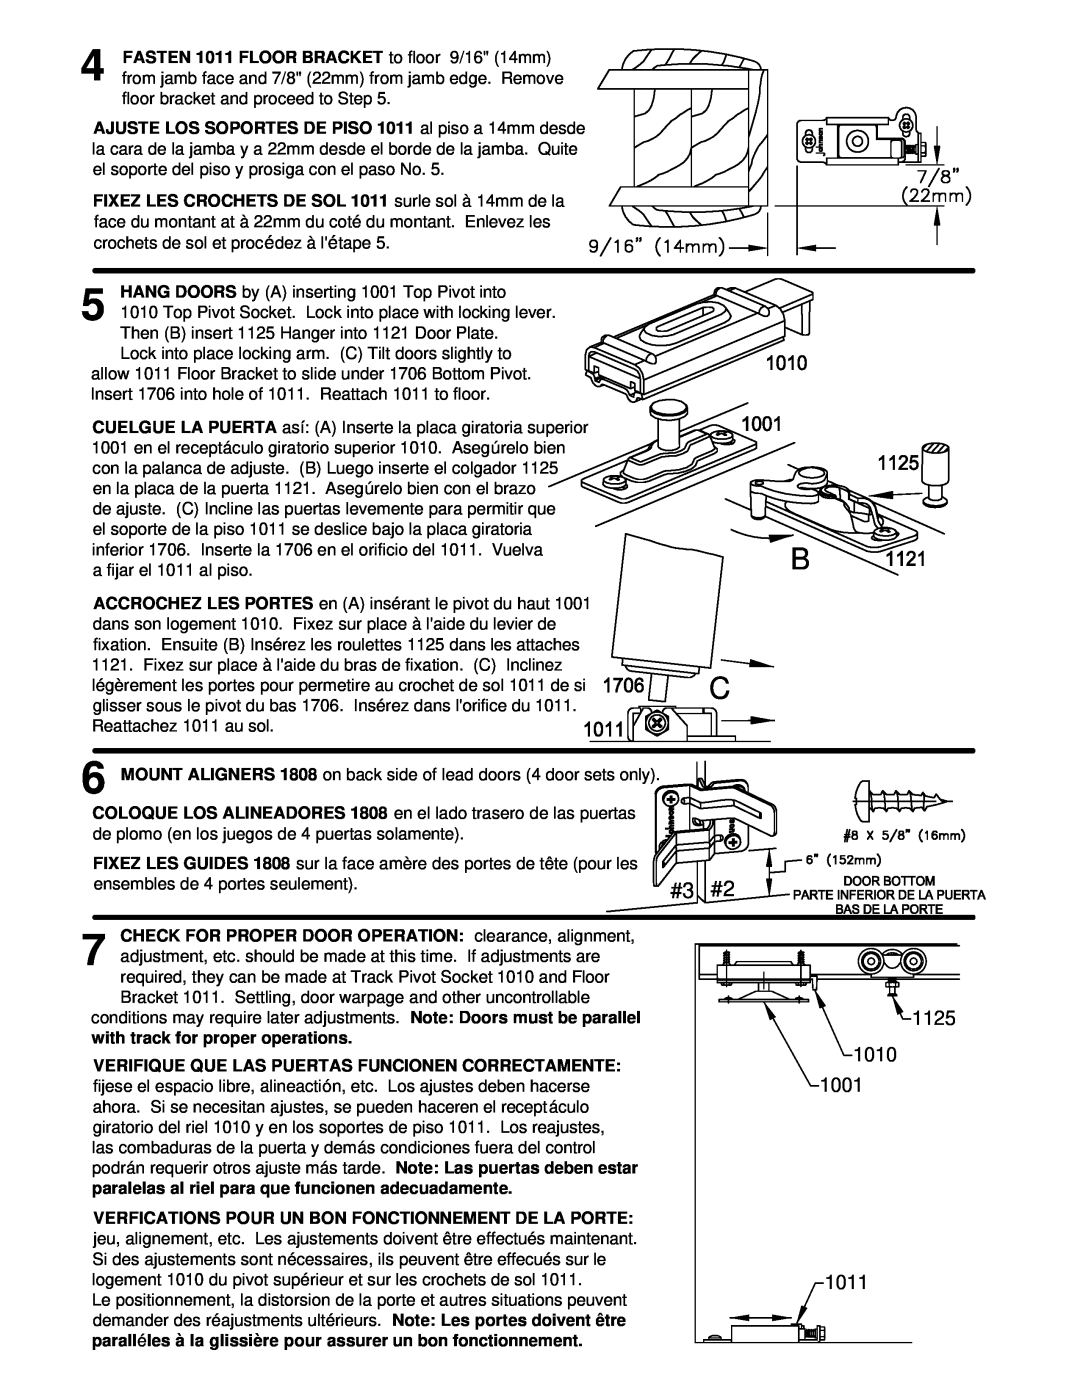 Johnson Hardware 100FD Series, IN100FLD manual 1125, #3 #2 